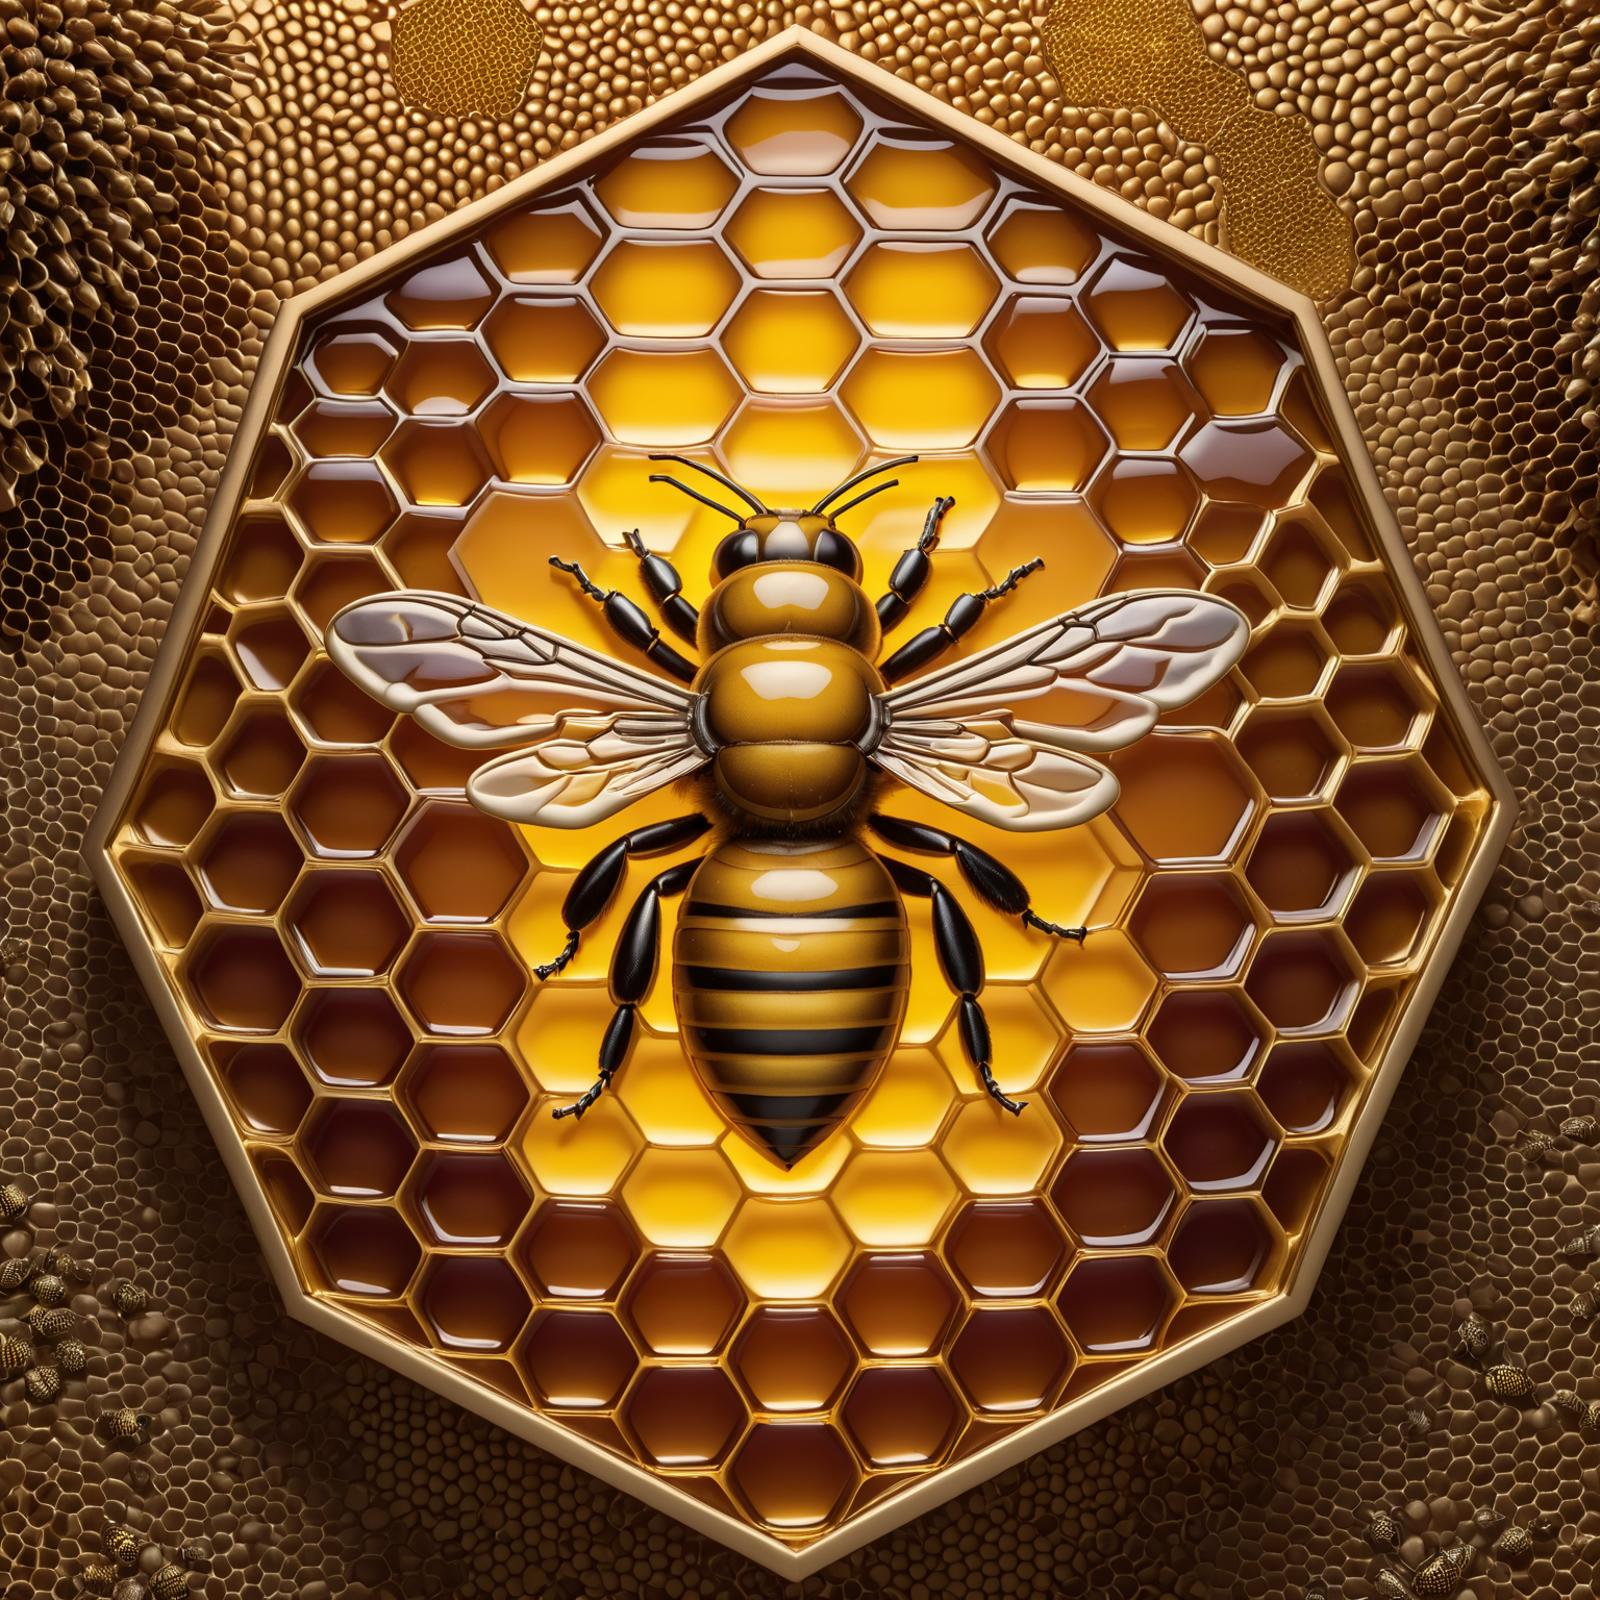 HoneyStyleXL image by artificialstupidity